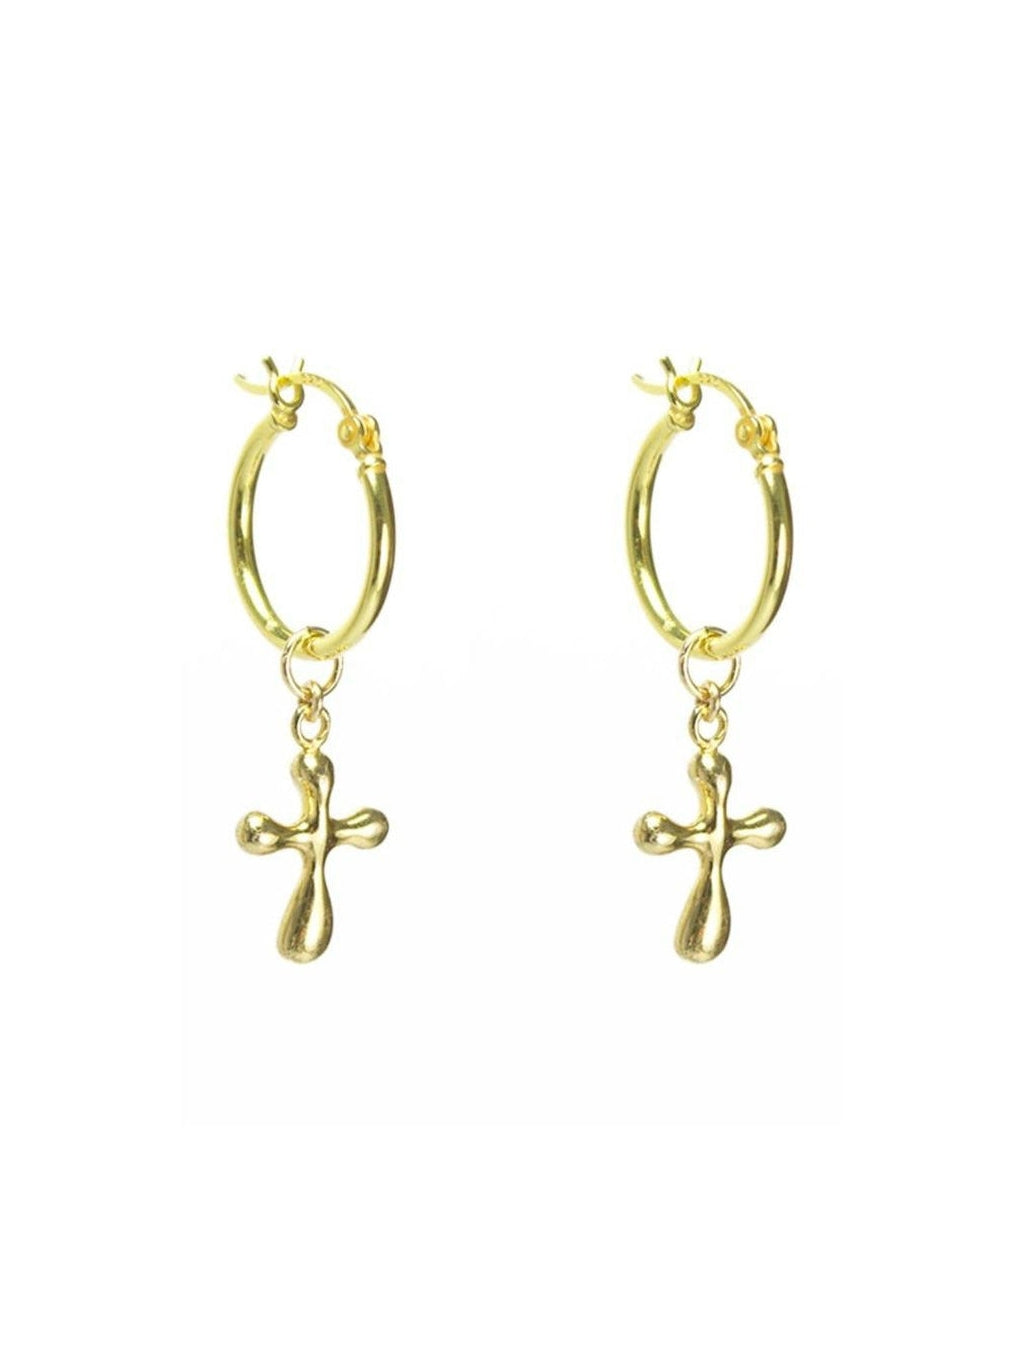 Ryder Chunky Cross Hoop Earrings in Gold